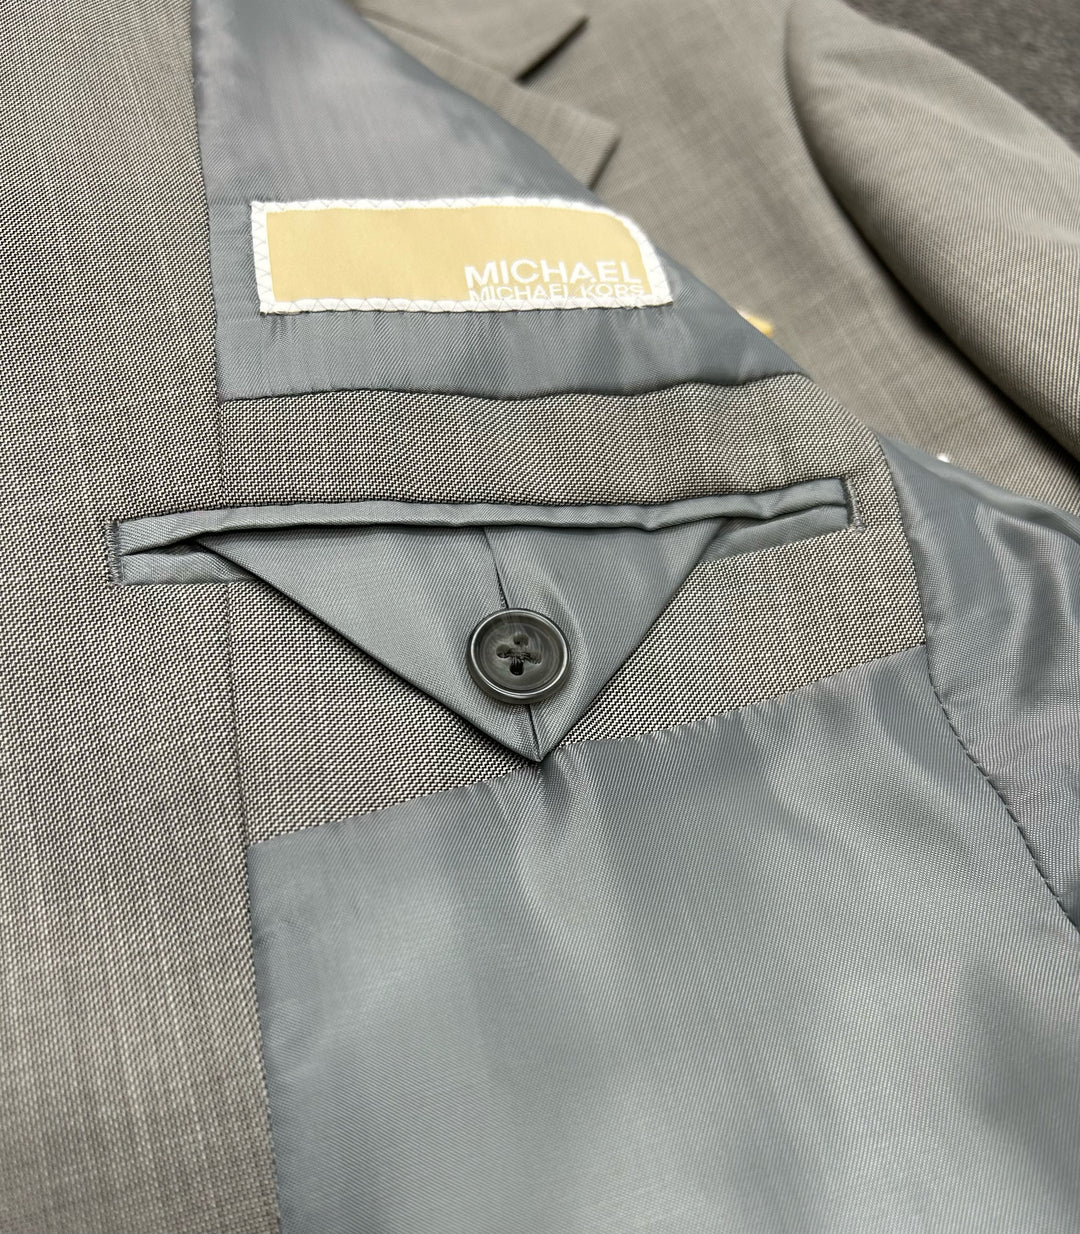 Michael Kors Boys Suit 3 Button Light Grey Clearance Suit-Grey/Tan